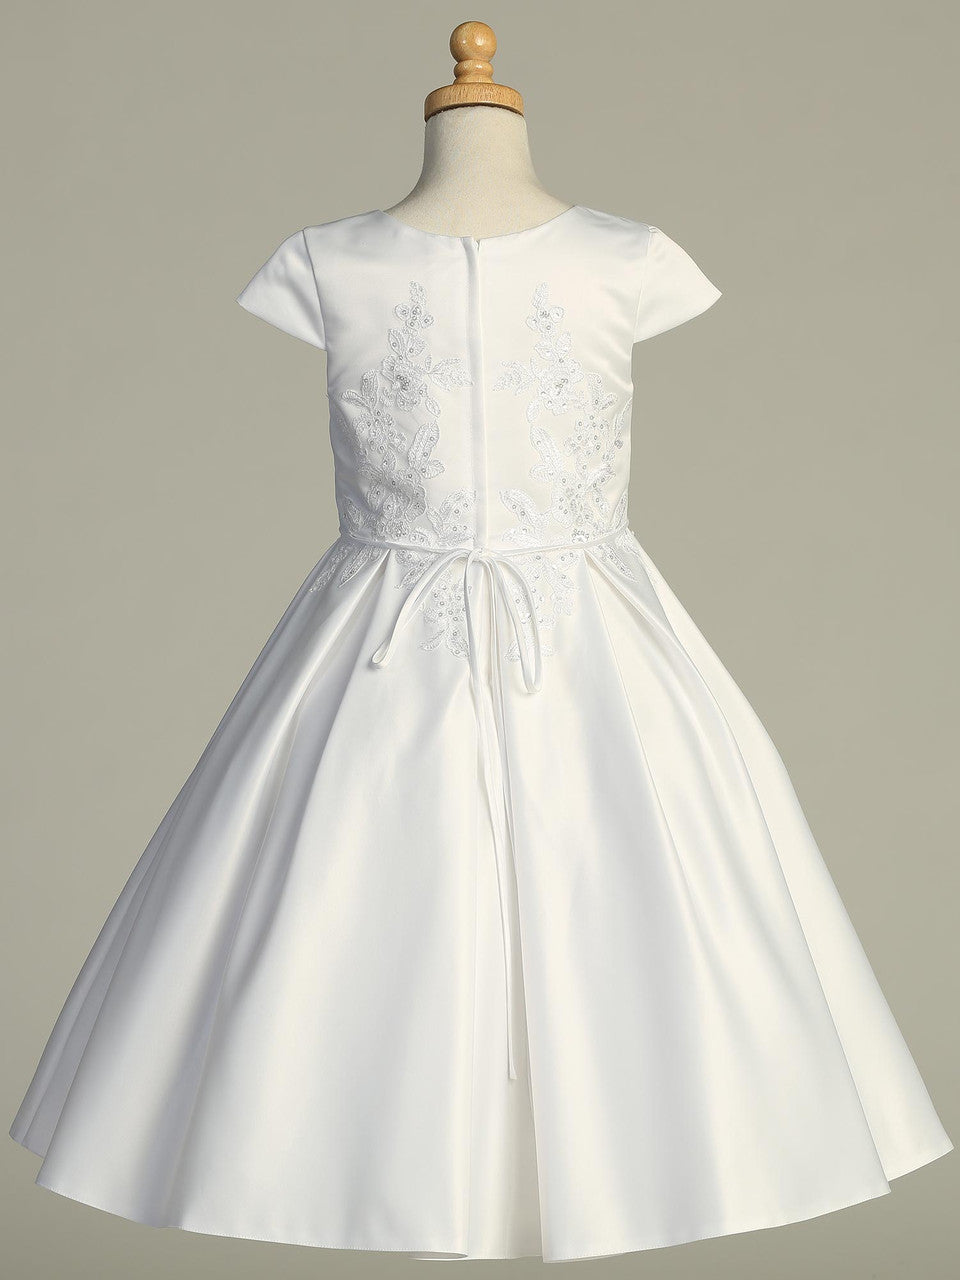 White Satin Dress SP 735